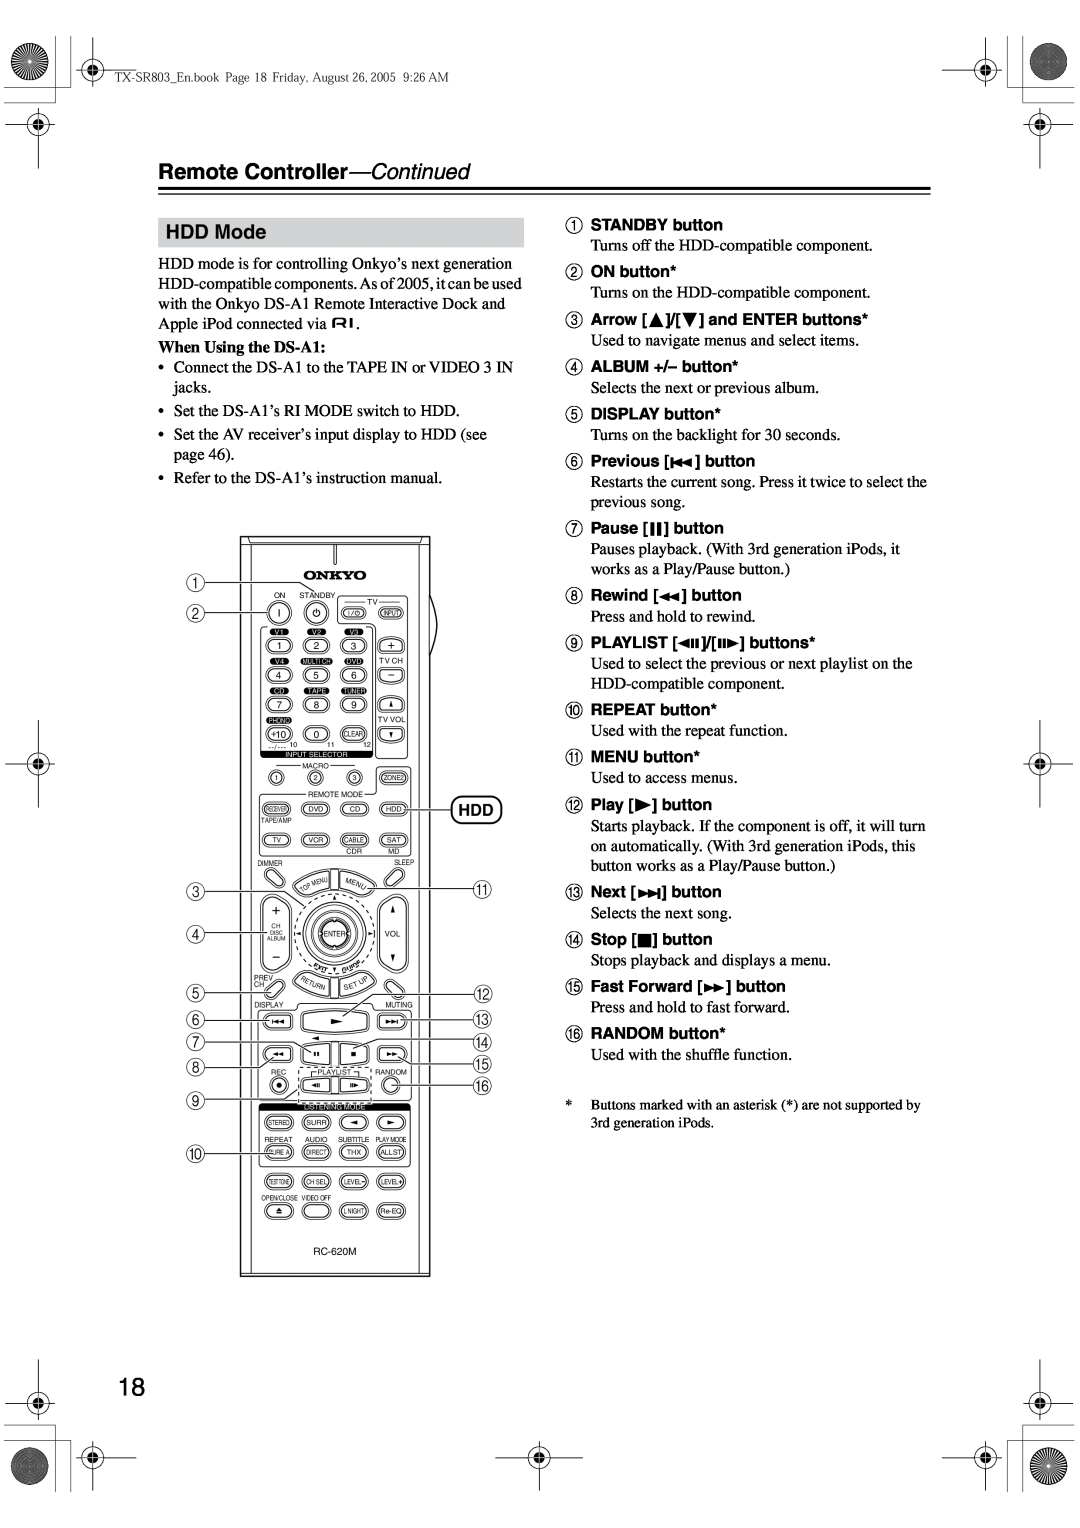 Onkyo TX-SR 803E, TX-SR8370, TX-SR803, TX-SR703E instruction manual HDD Mode, Remote Controller—Continued 